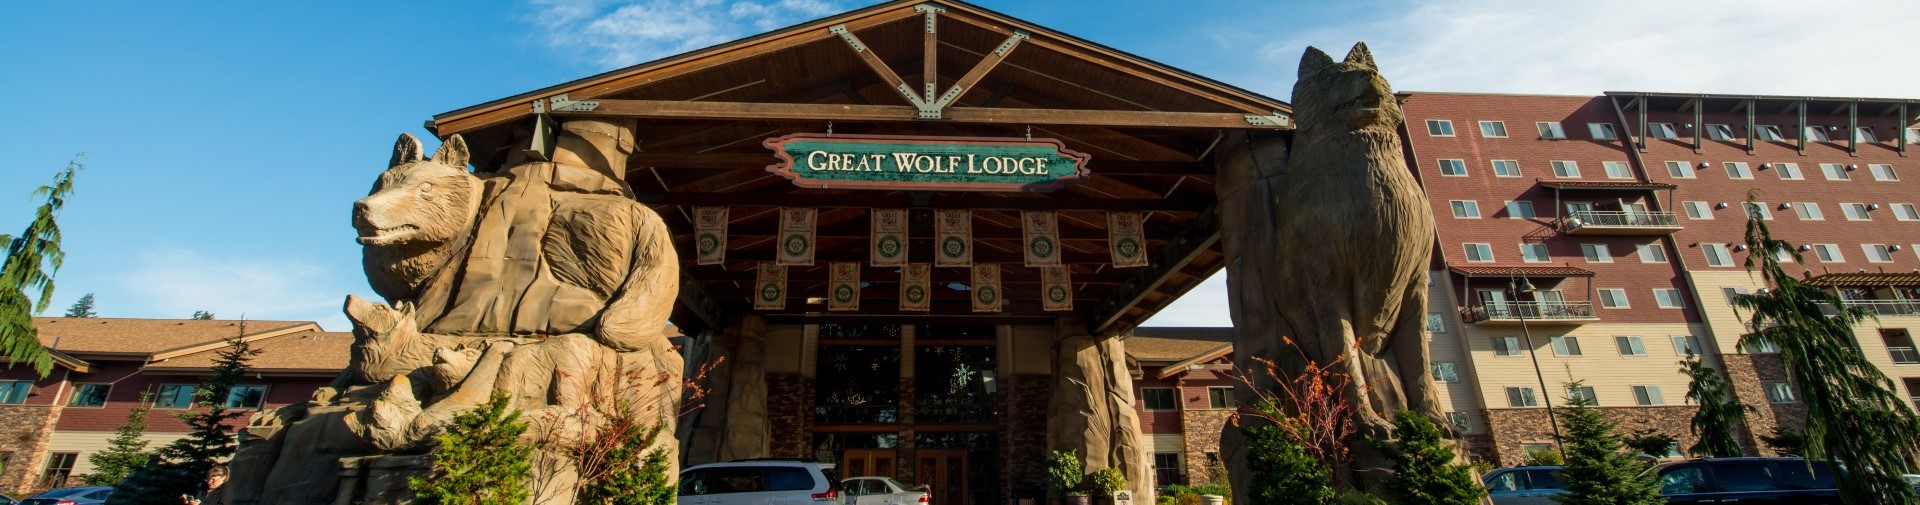 Great wolf lodge Grand Mound